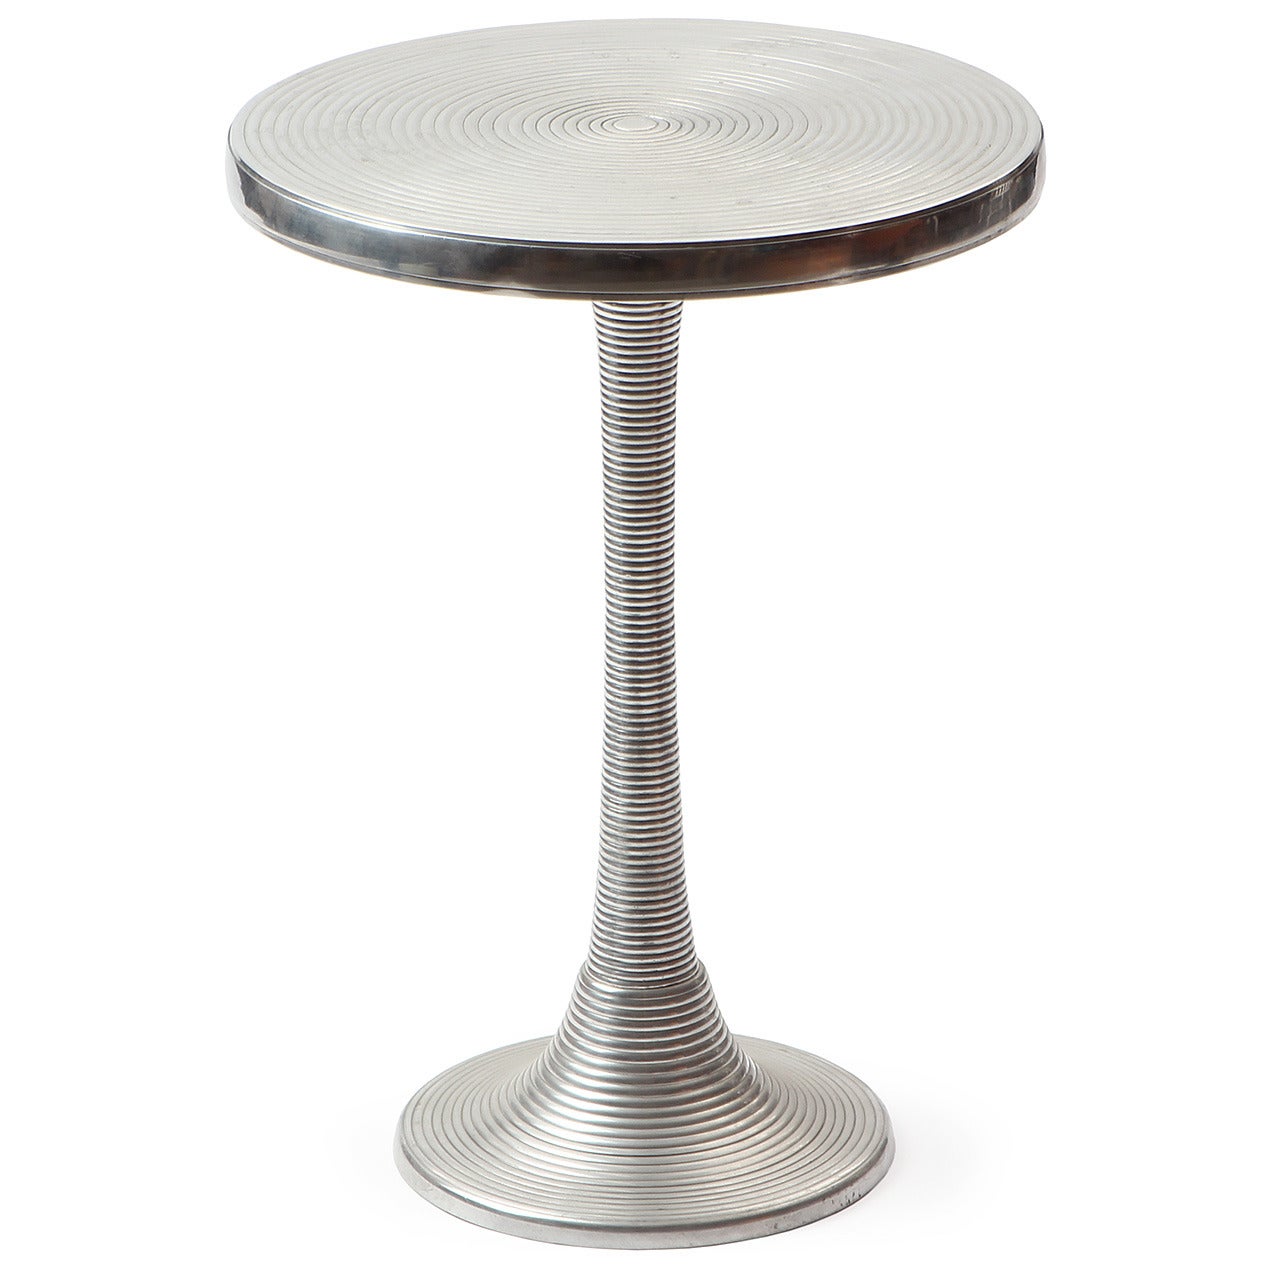 Striated Aluminum Occasional Table